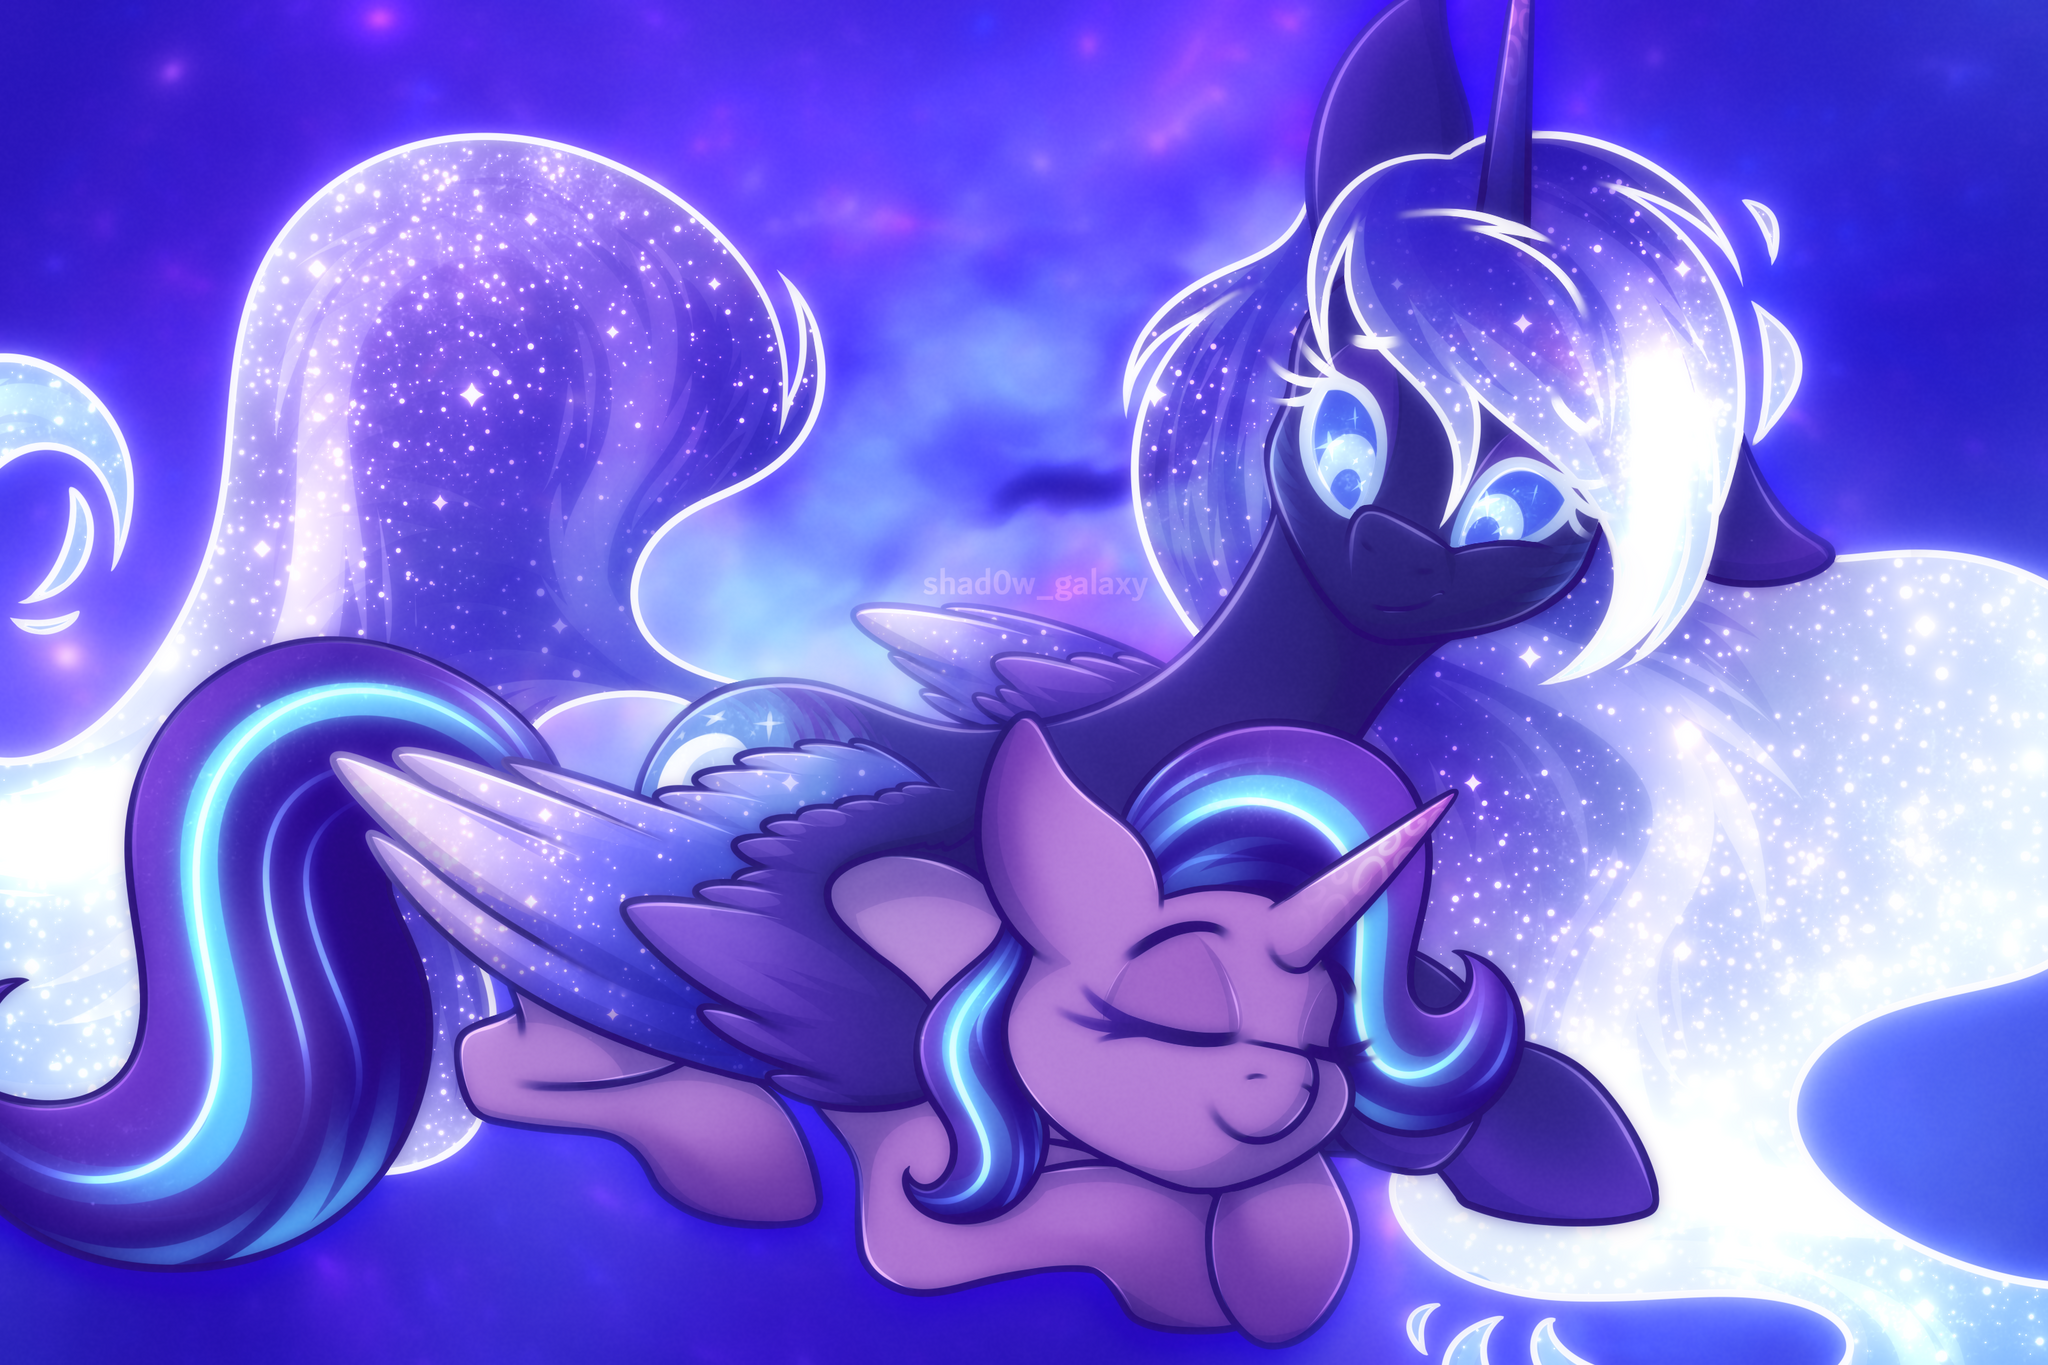 Deep sleep - My little pony, PonyArt, Princess luna, Starlight Glimmer, Shad0w-Galaxy